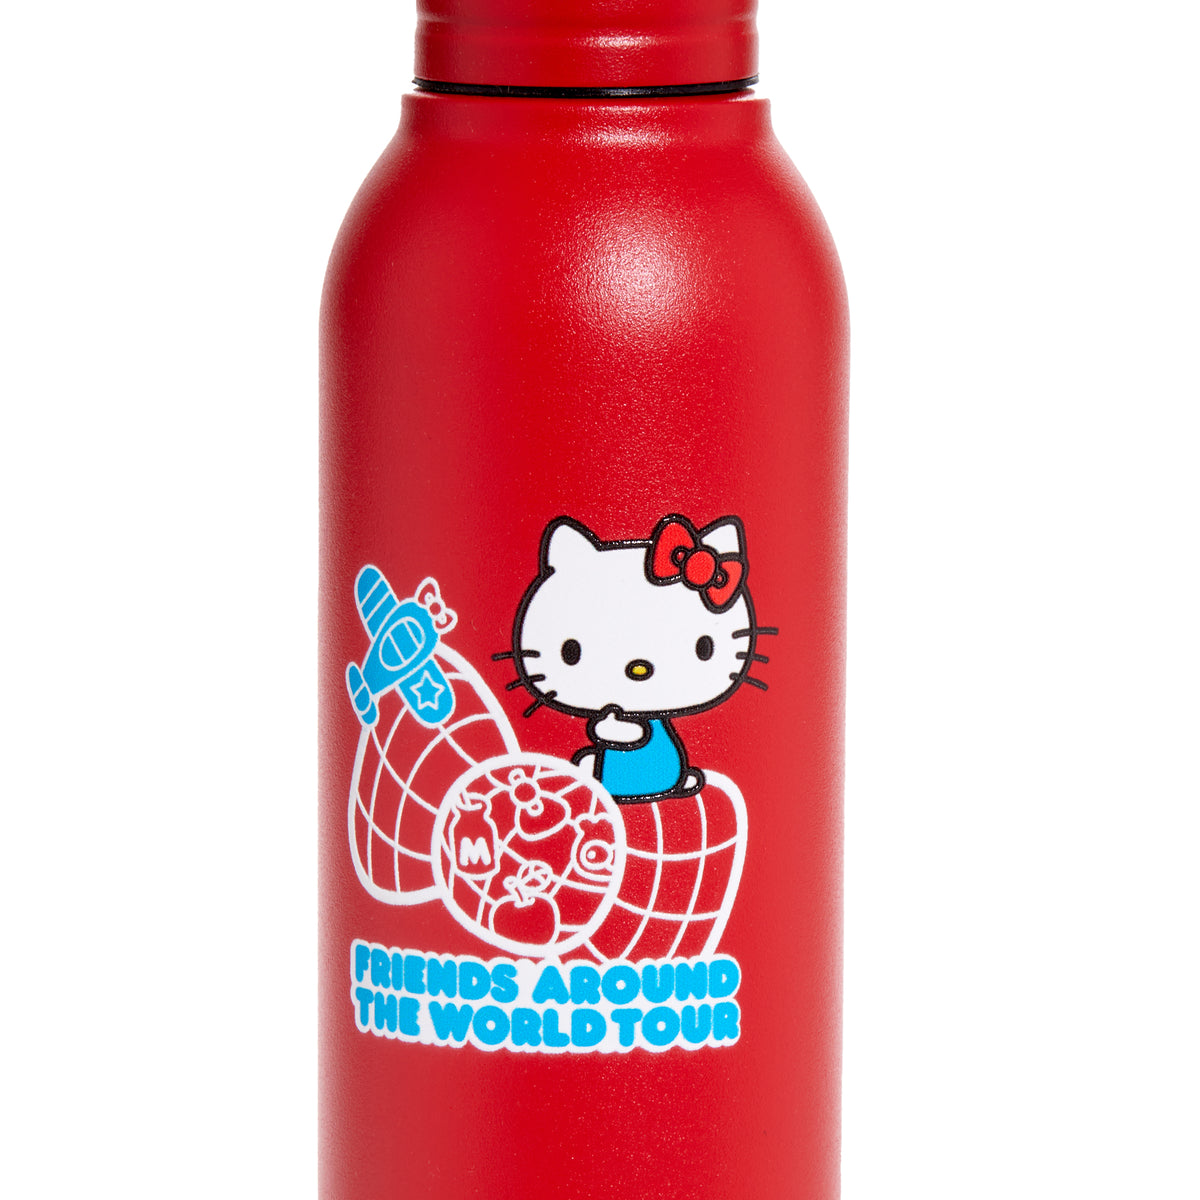 Hello Kitty Kids Water Bottle